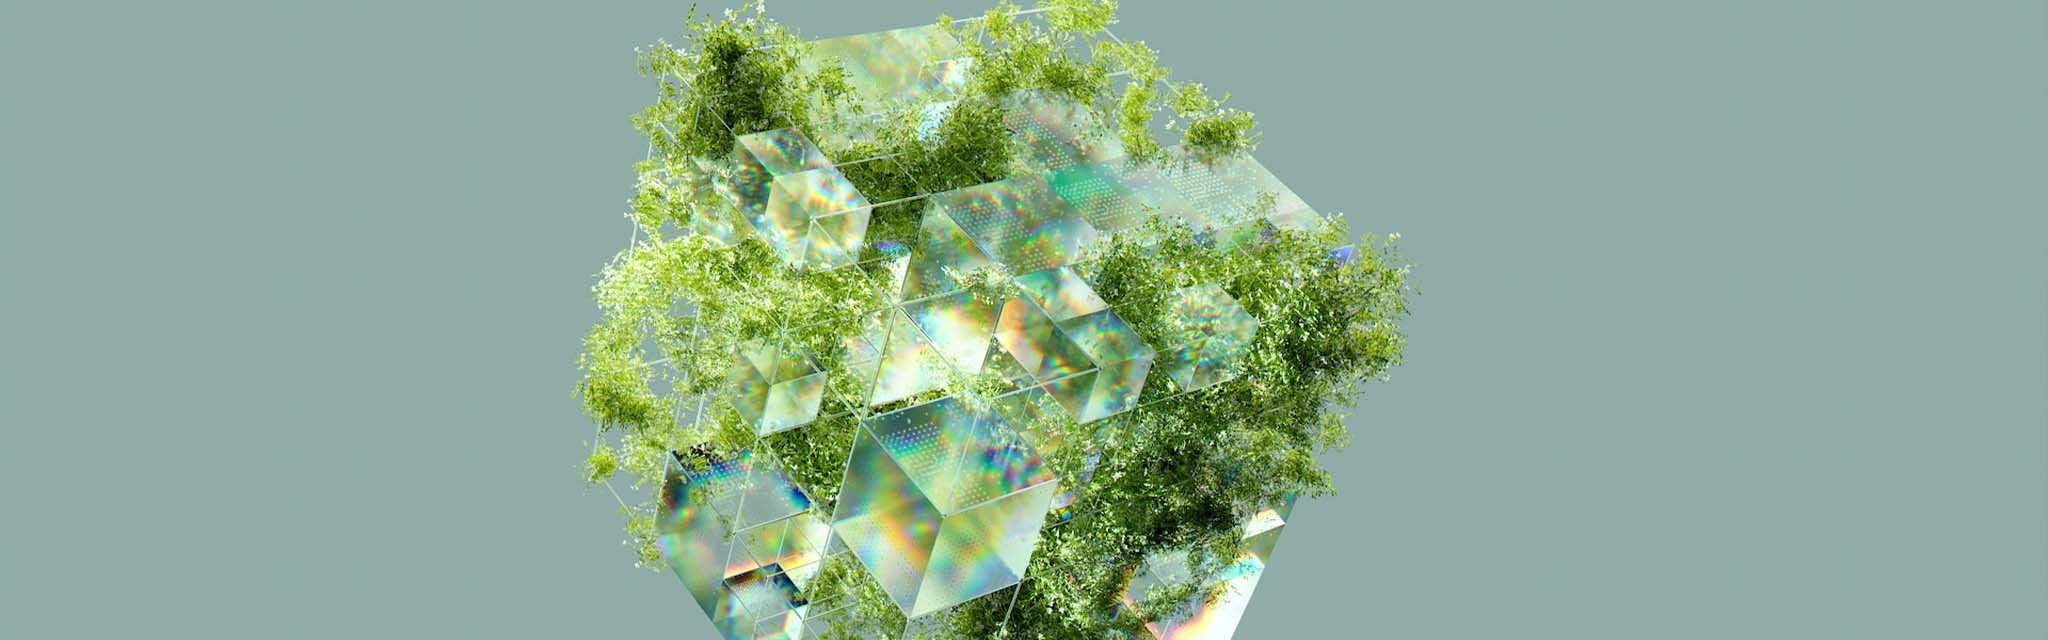 Recrutement énergie verte : rendu 3D d'un cube futuriste mixé à la nature